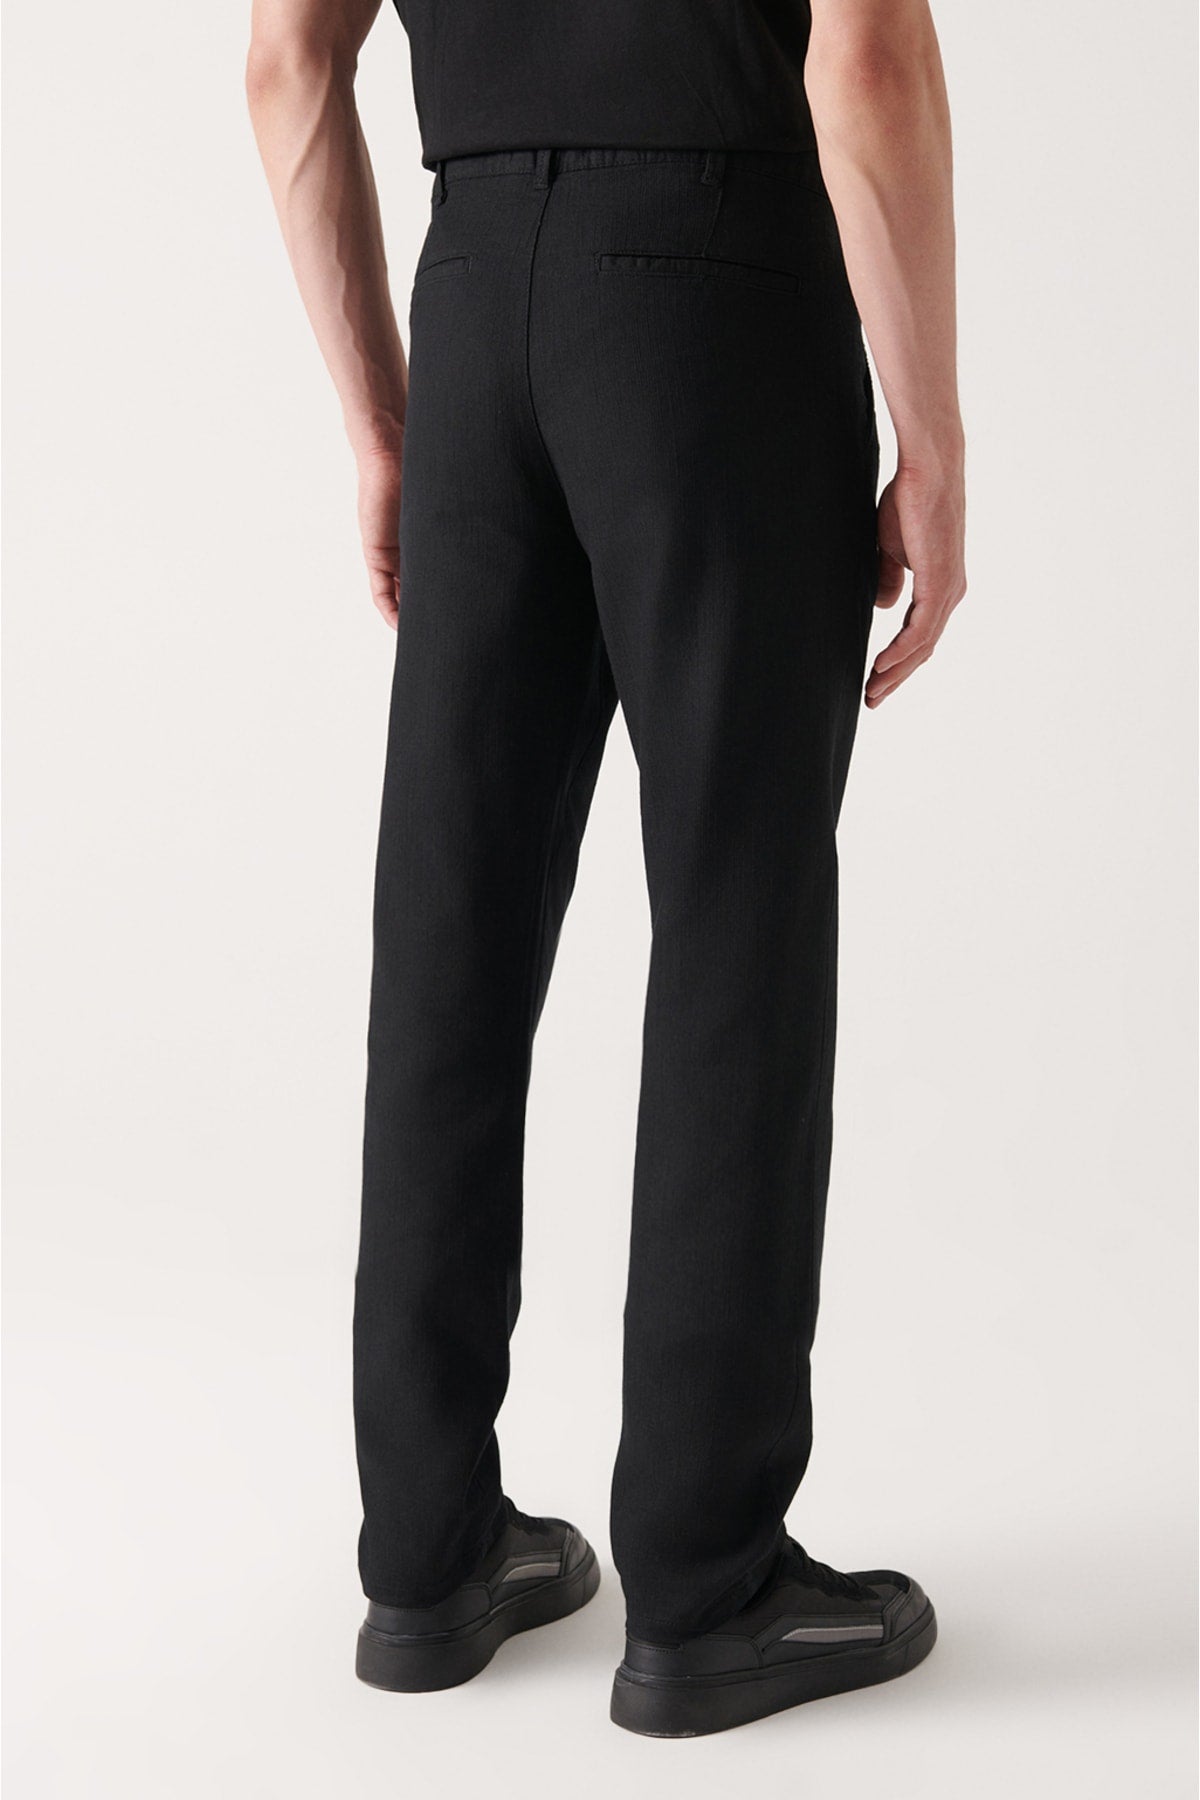 Men's Black Side Comfort Slim Fit Pants E003020